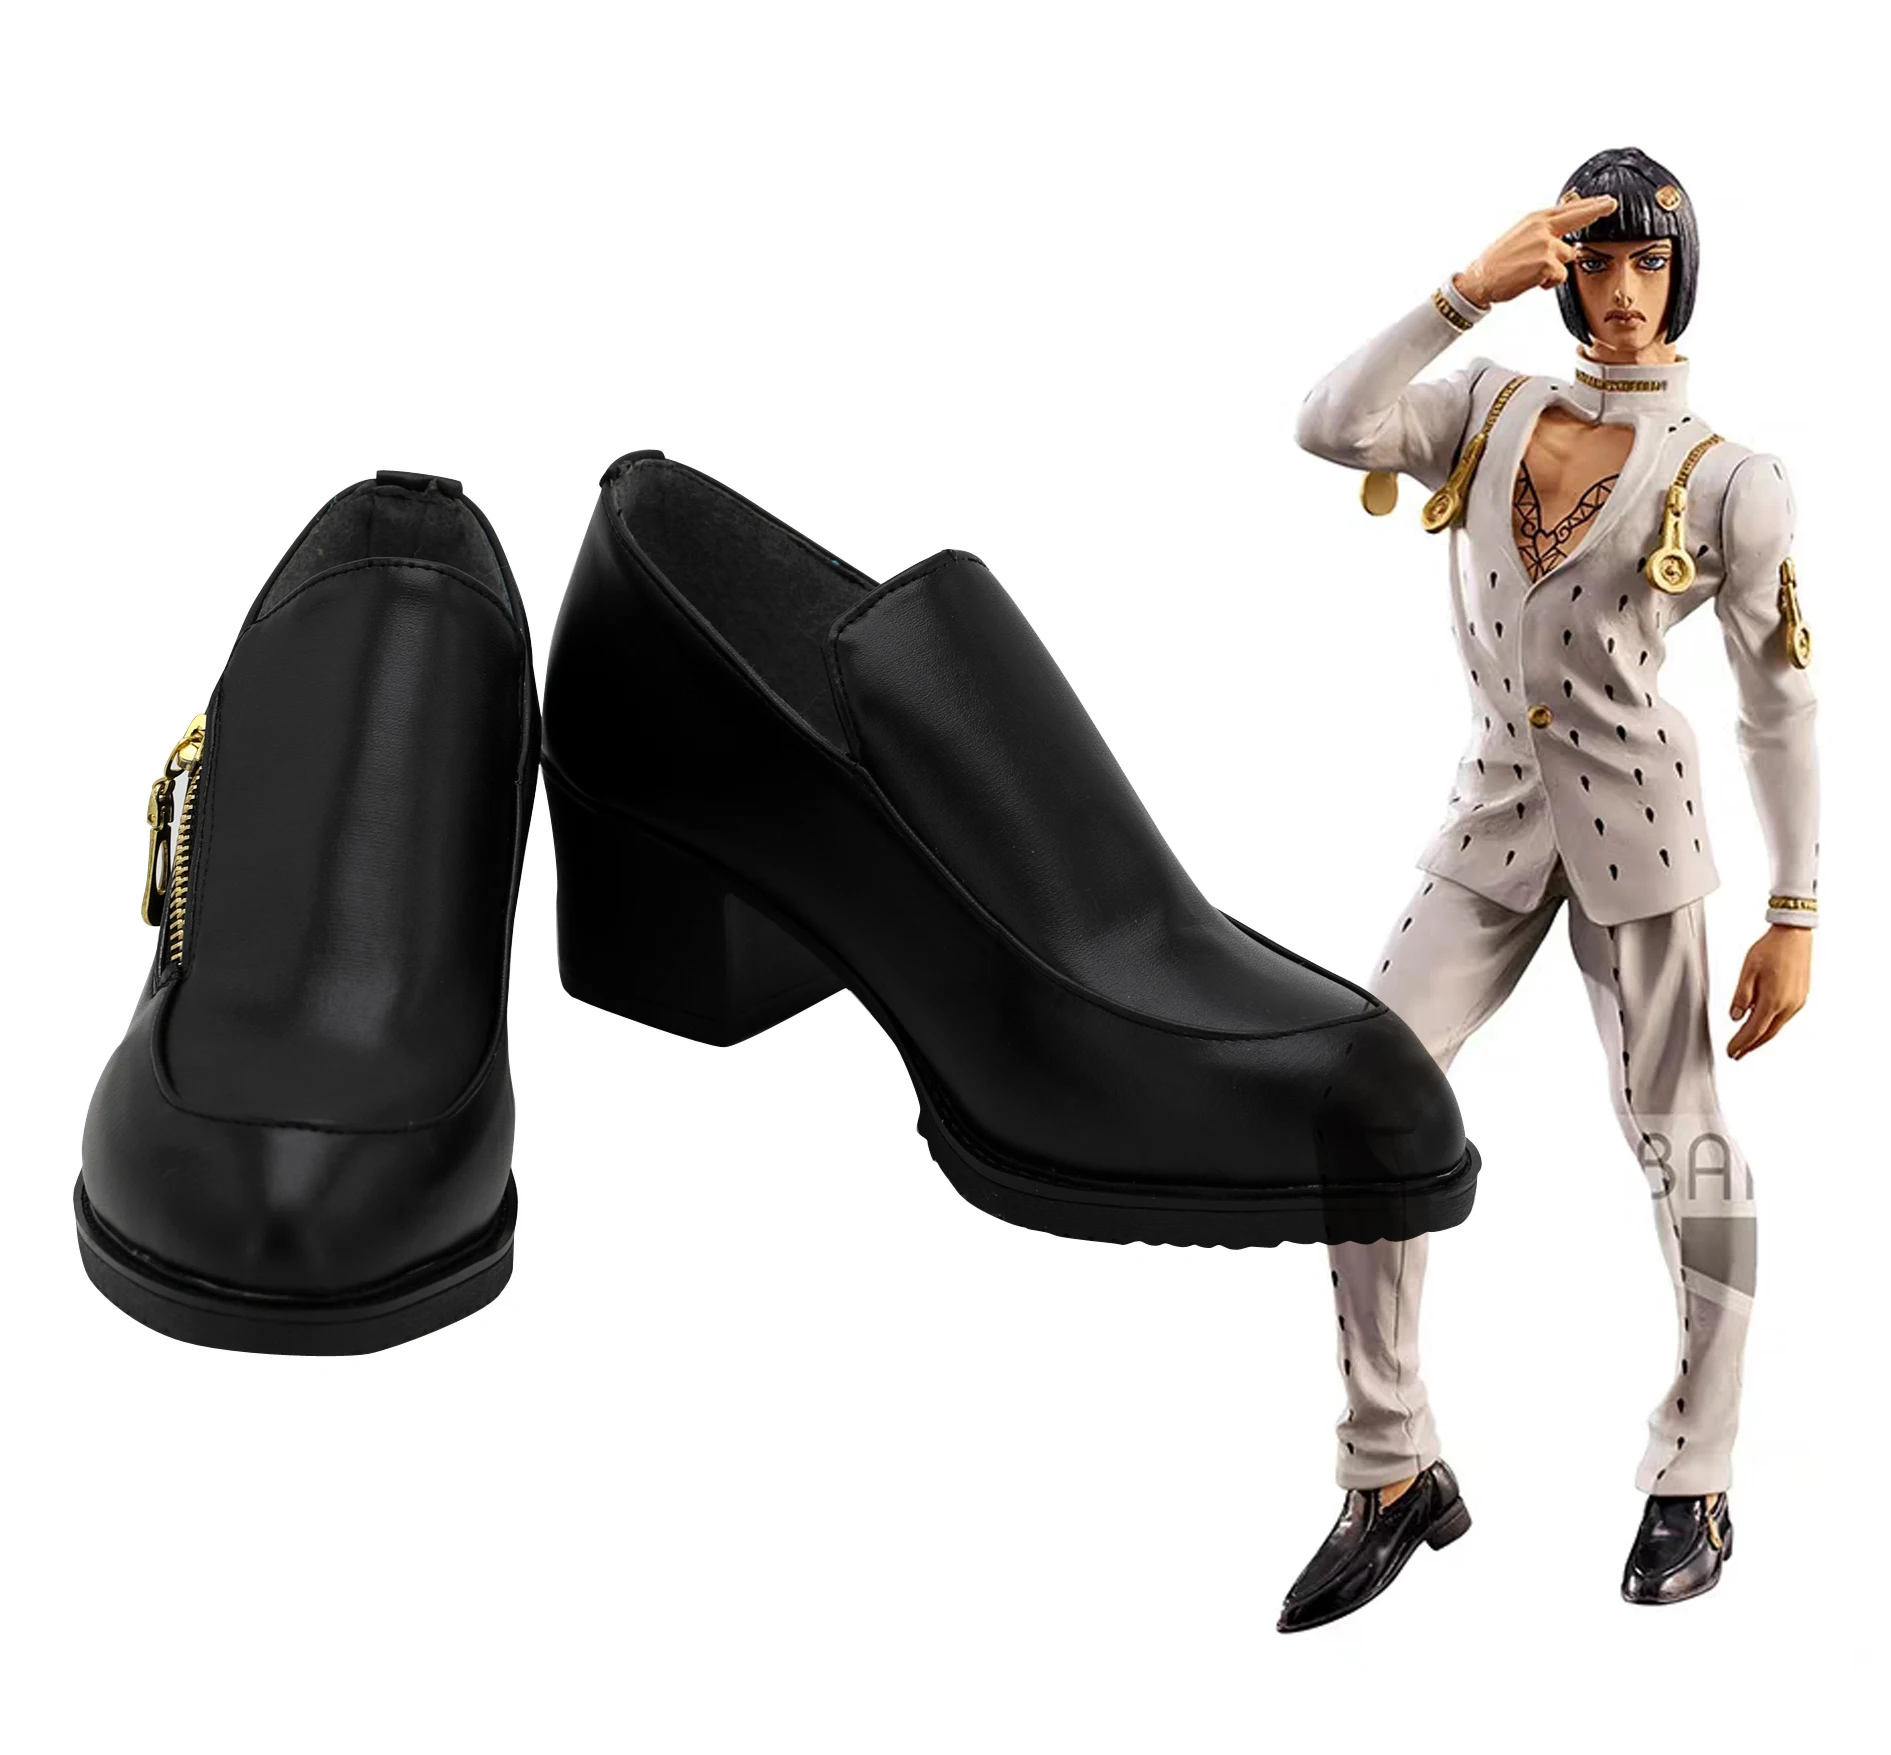 Bruno Bucciarati Shoes Cosplay JoJo's Bizarre Adventure Boots Black Version 